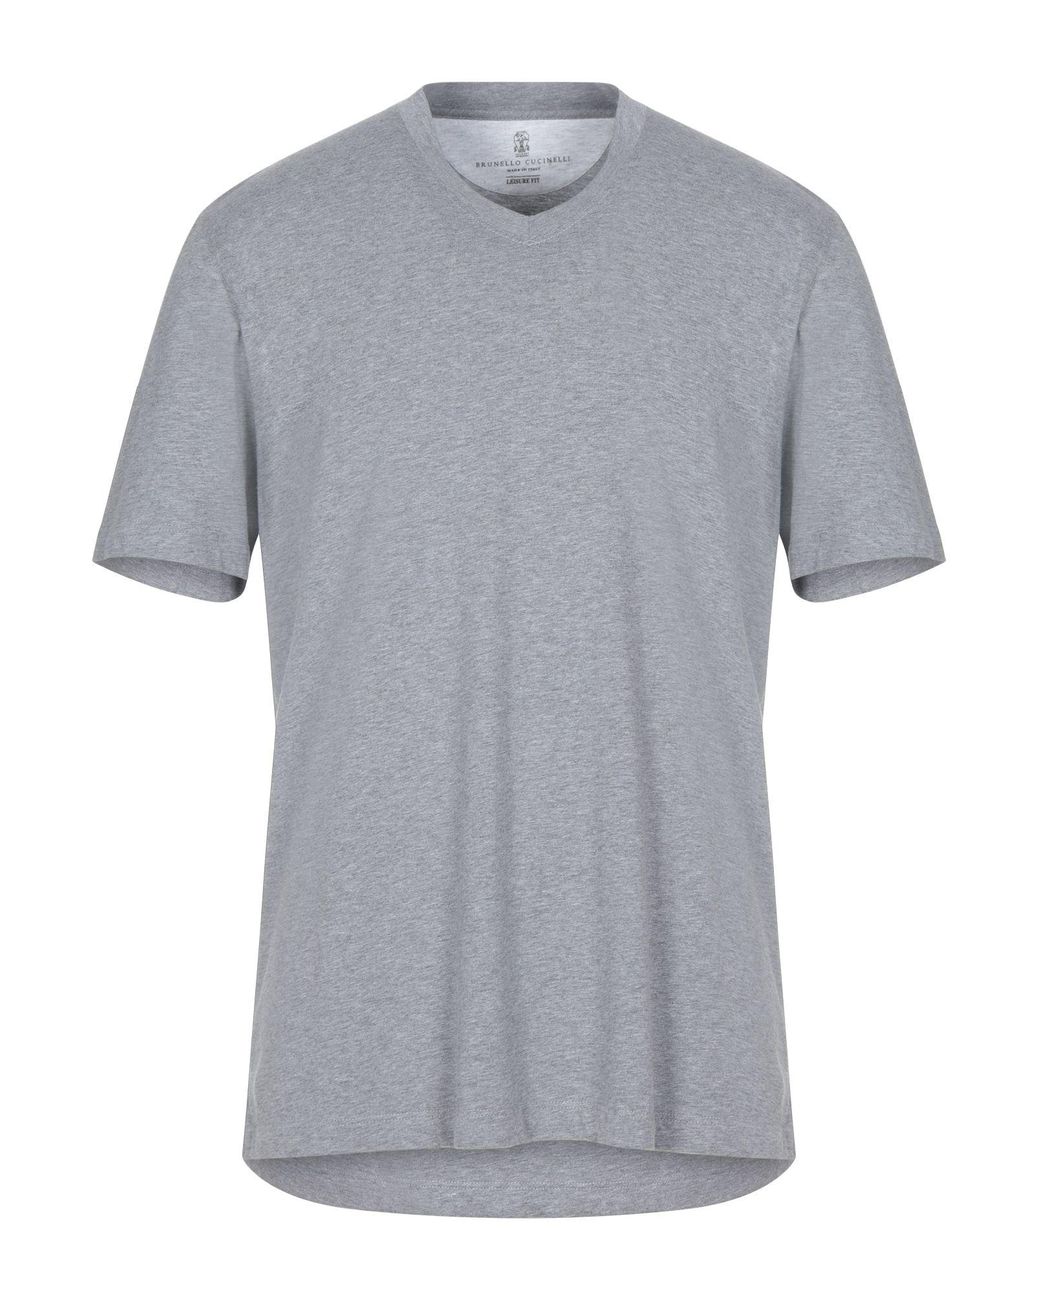 Brunello Cucinelli Cotton T-shirt in Grey (Gray) for Men - Lyst